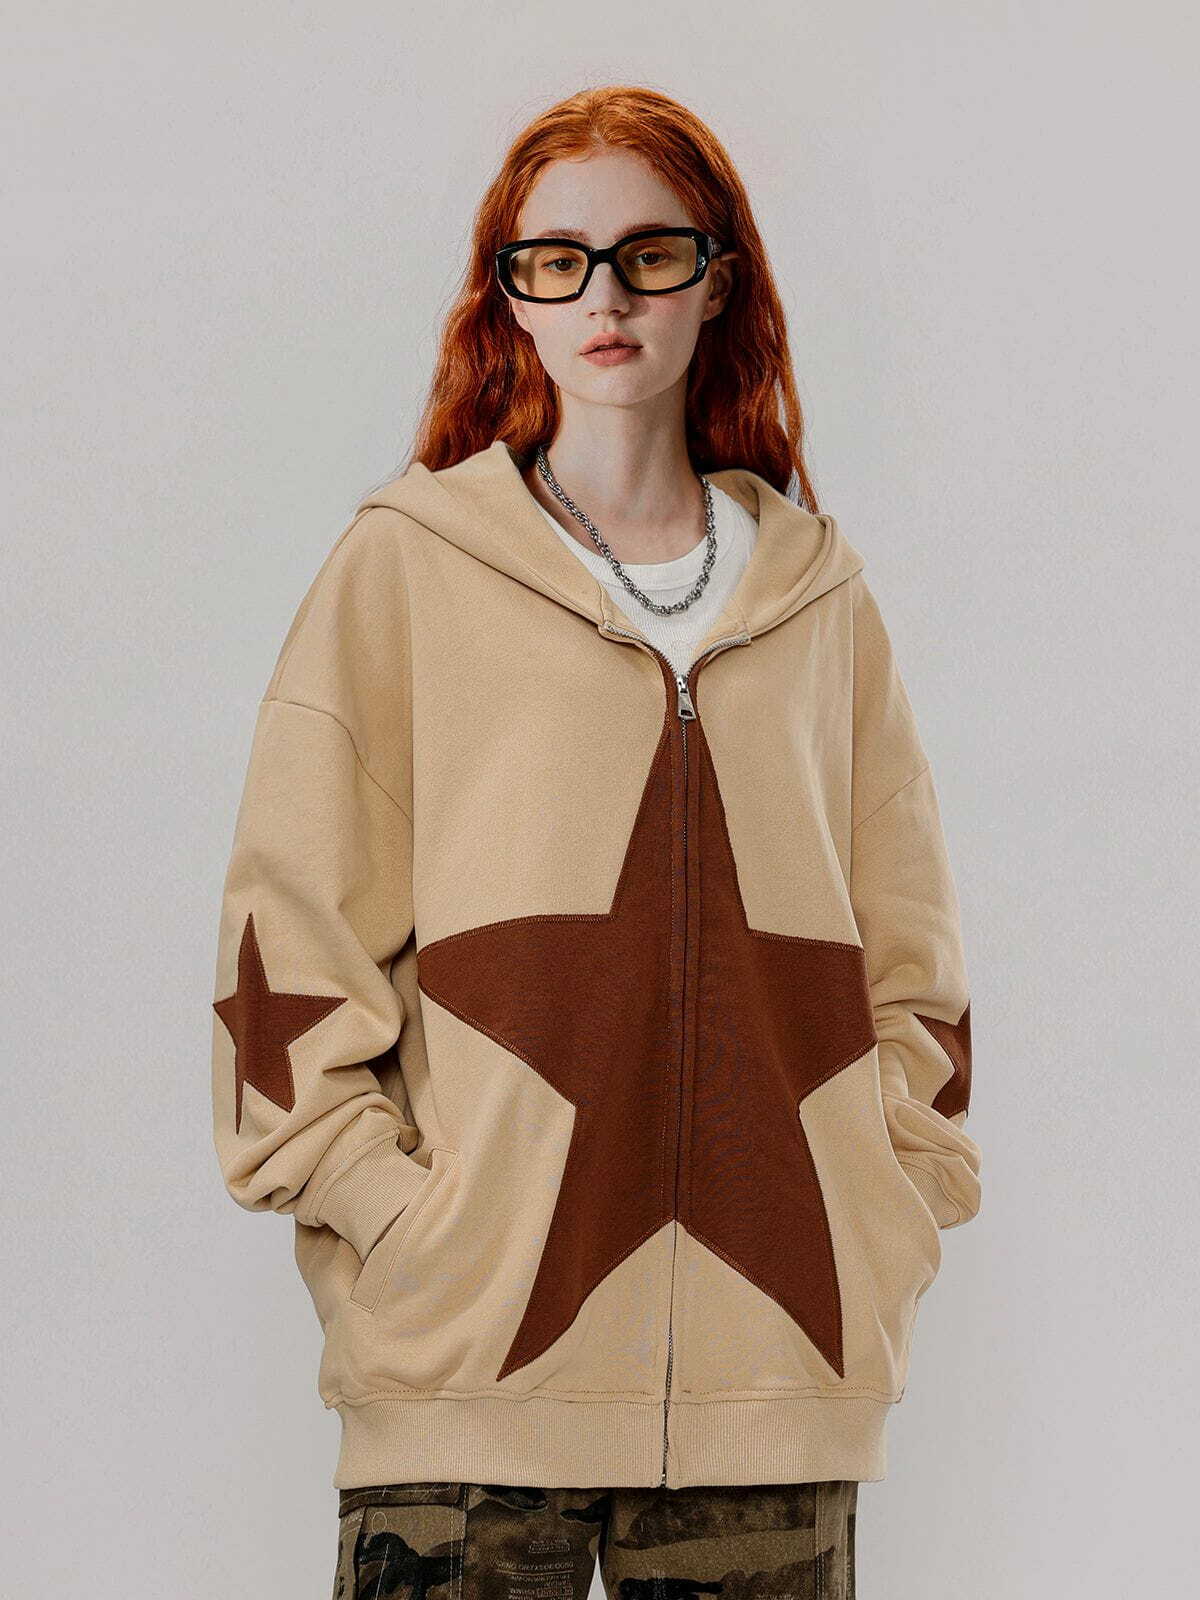 dynamic star graphic hoodie edgy streetwear 6432